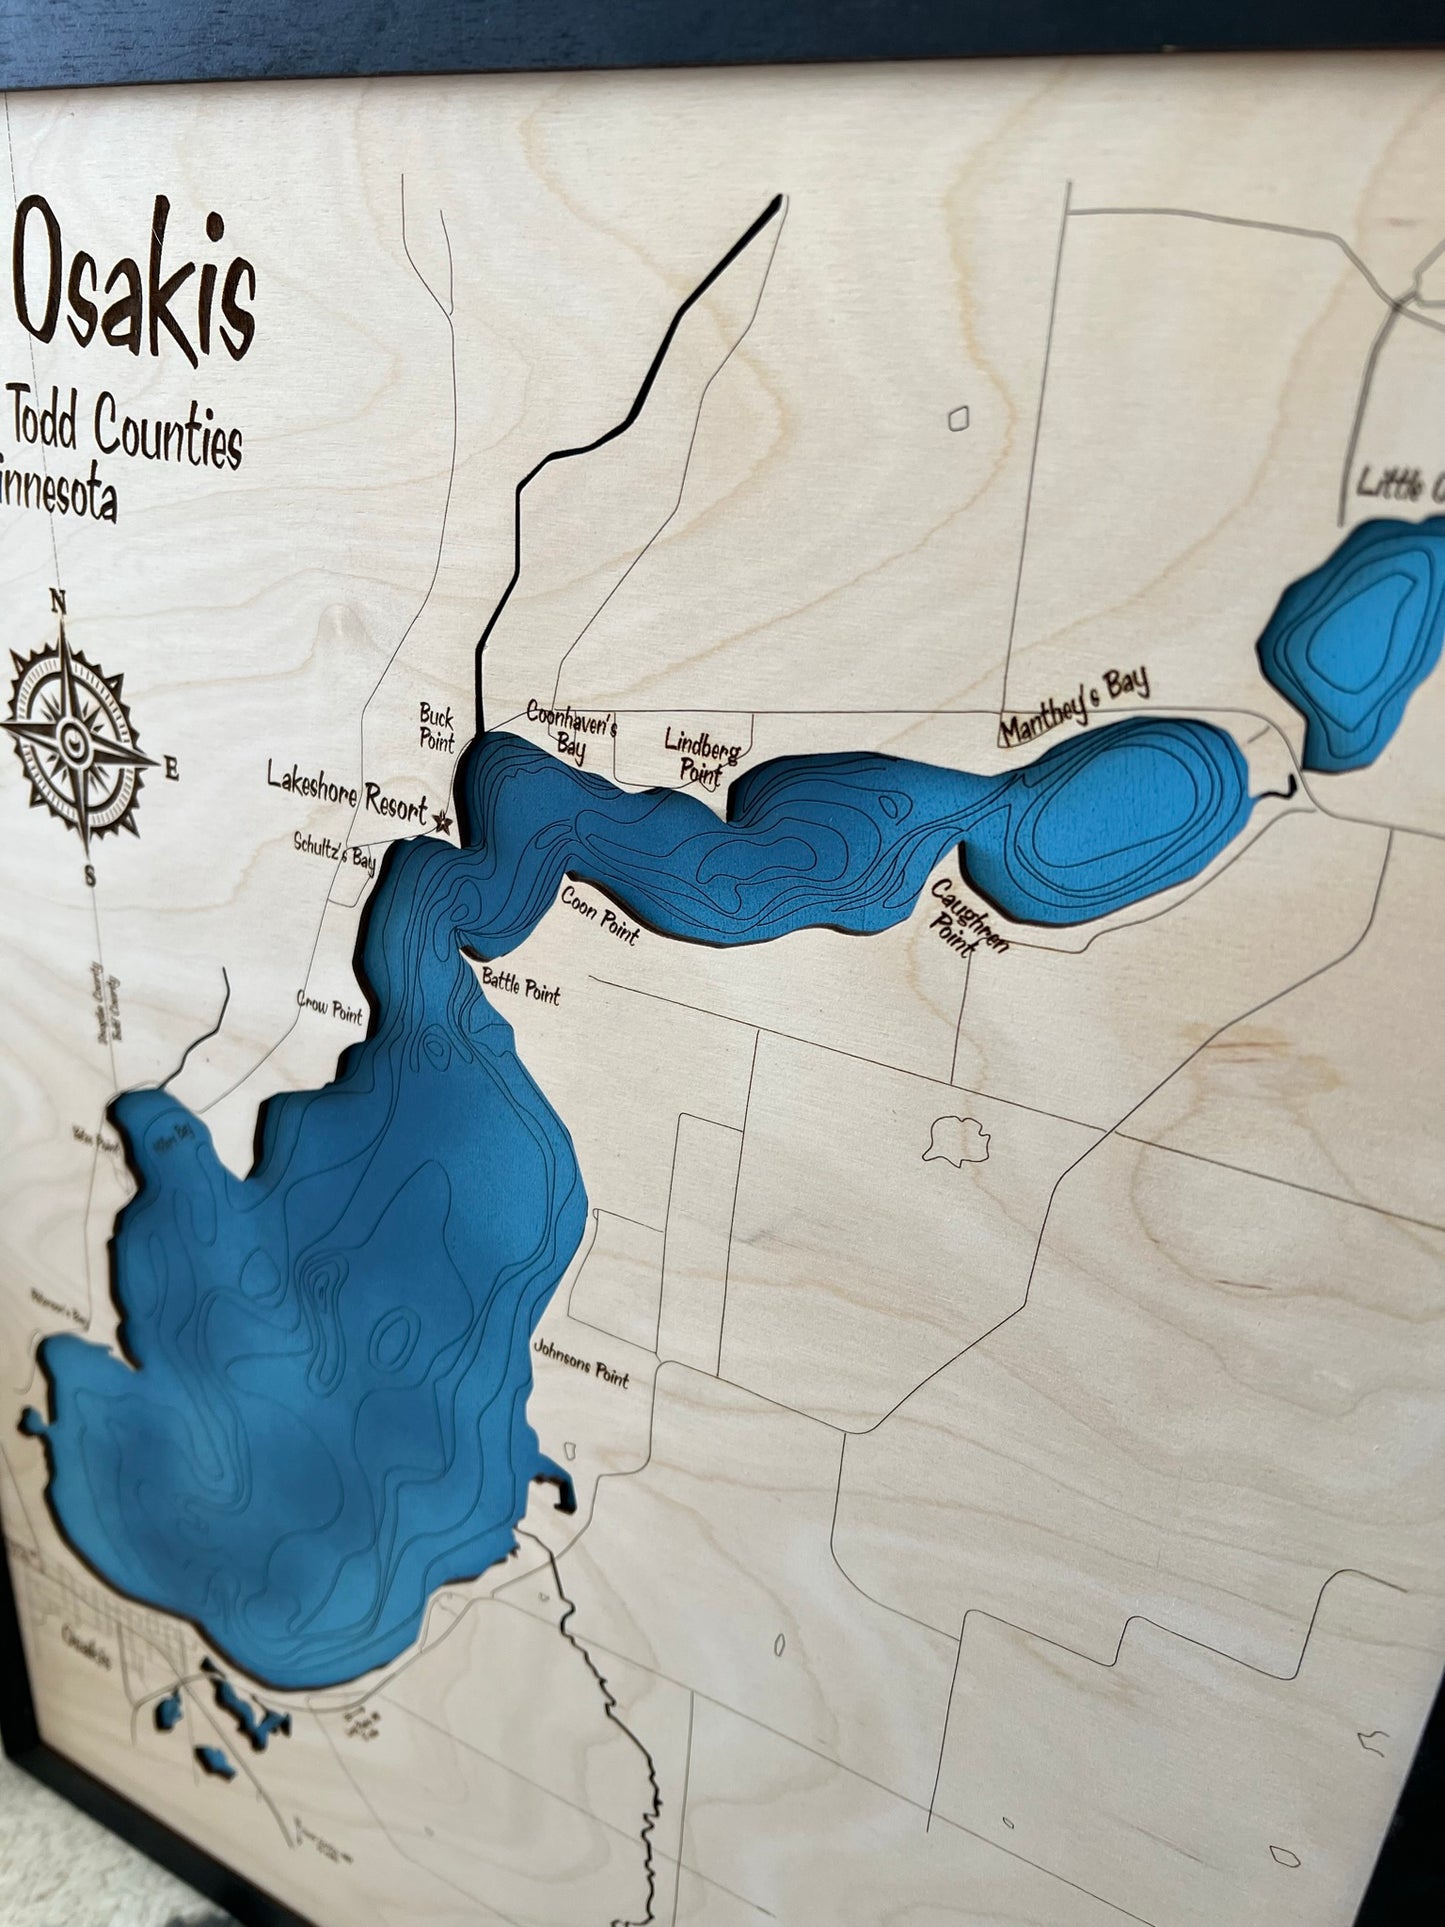 Lake Osakis Minnesota - Laser Engraved Map File